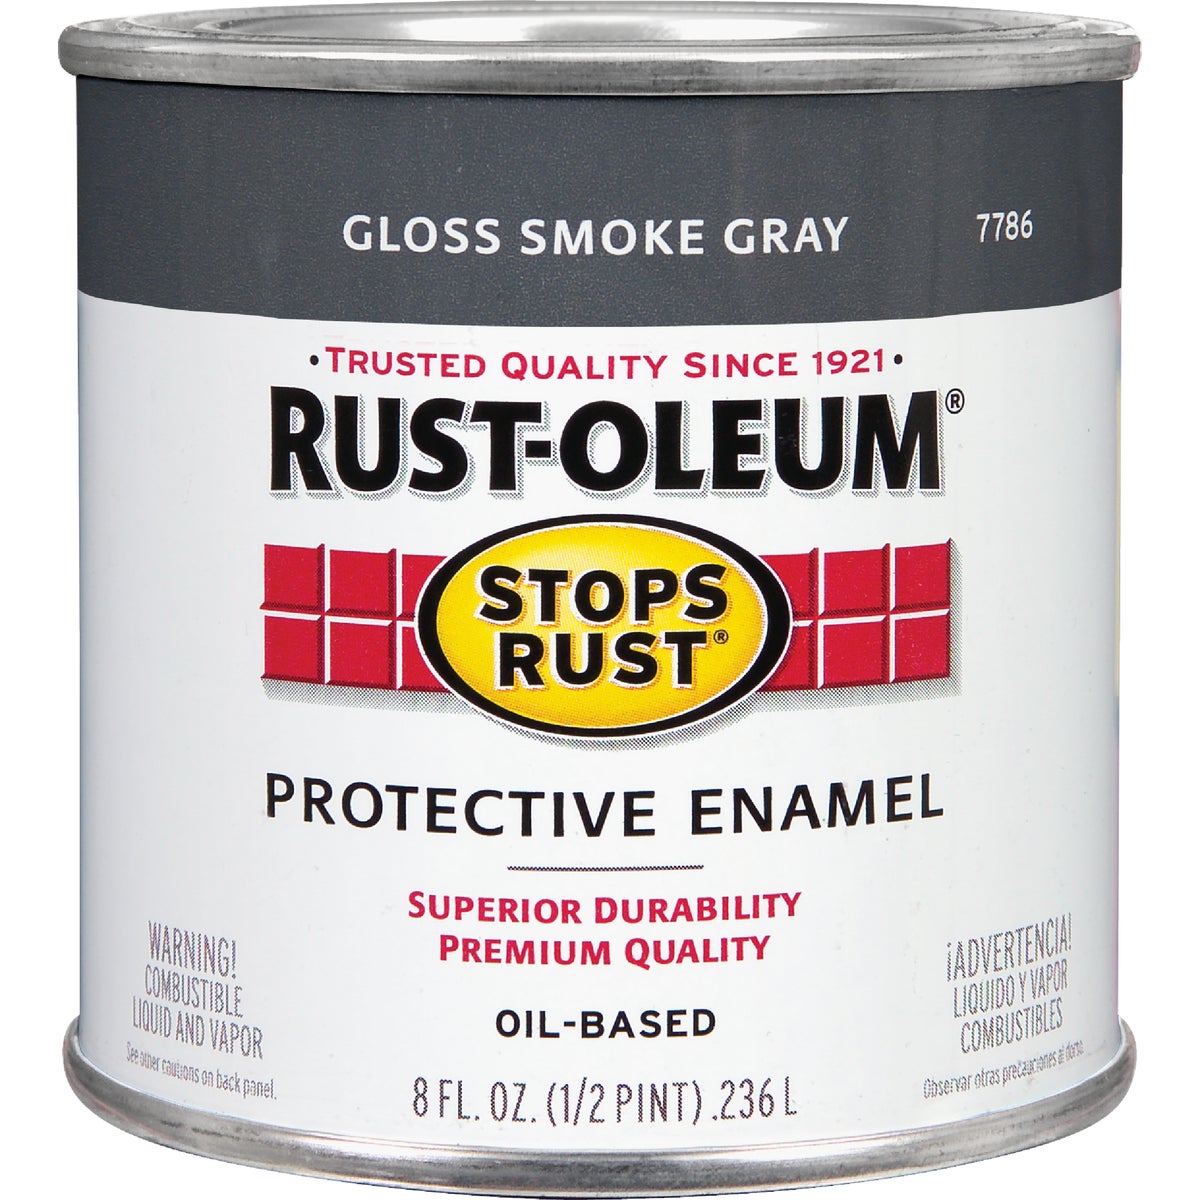 Rust-Oleum Stops Rust Oil Based Gloss Protective Rust Control Enamel, Smoke Gray, 1/2 Pt.